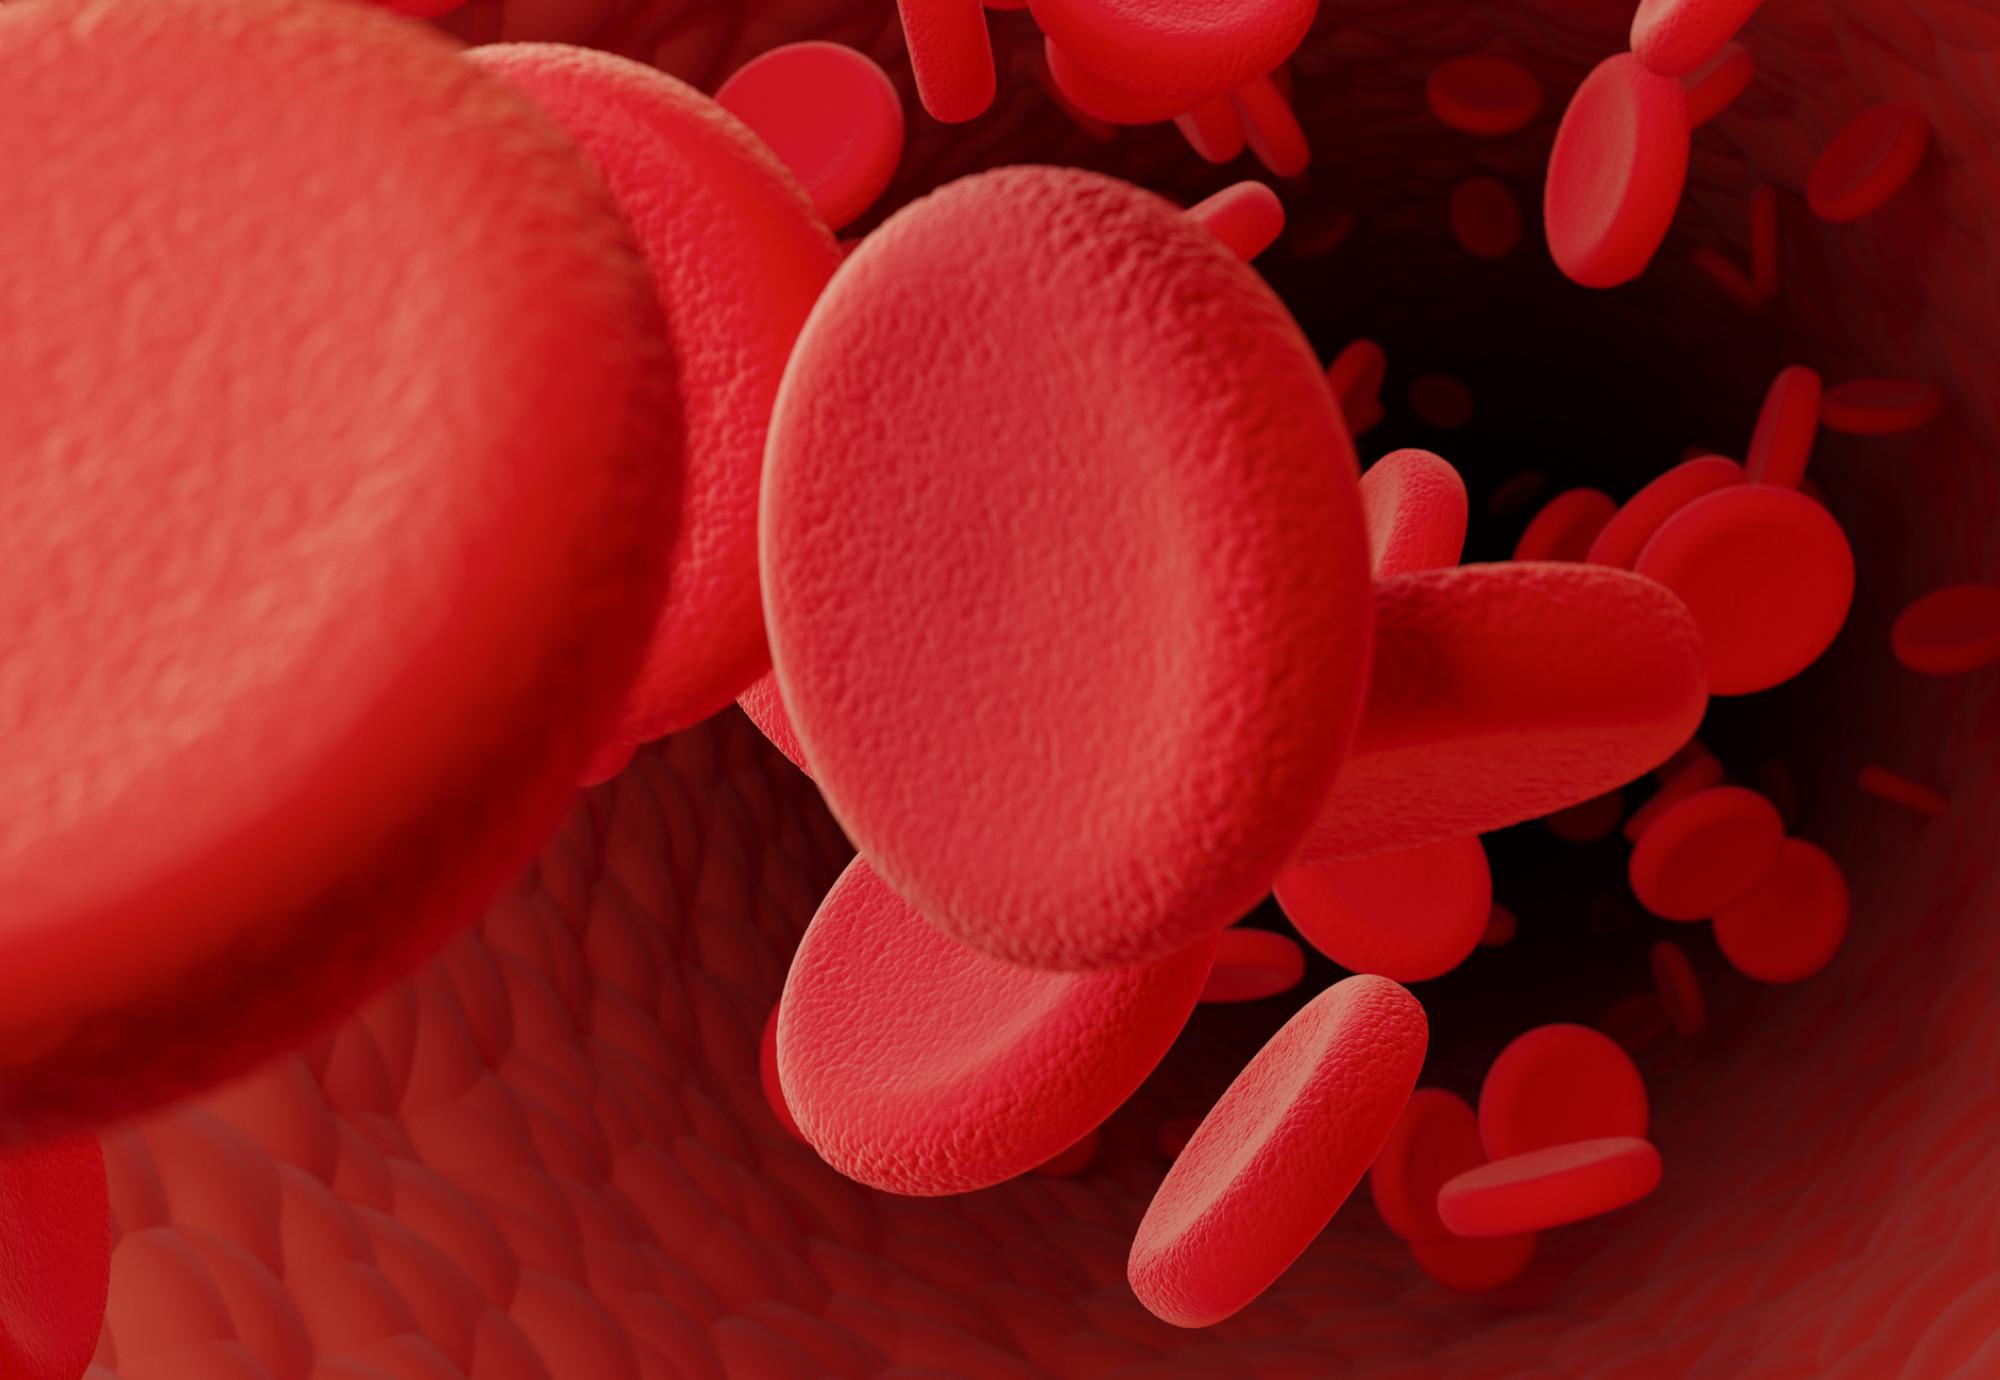 Artist illustration of a blood clot